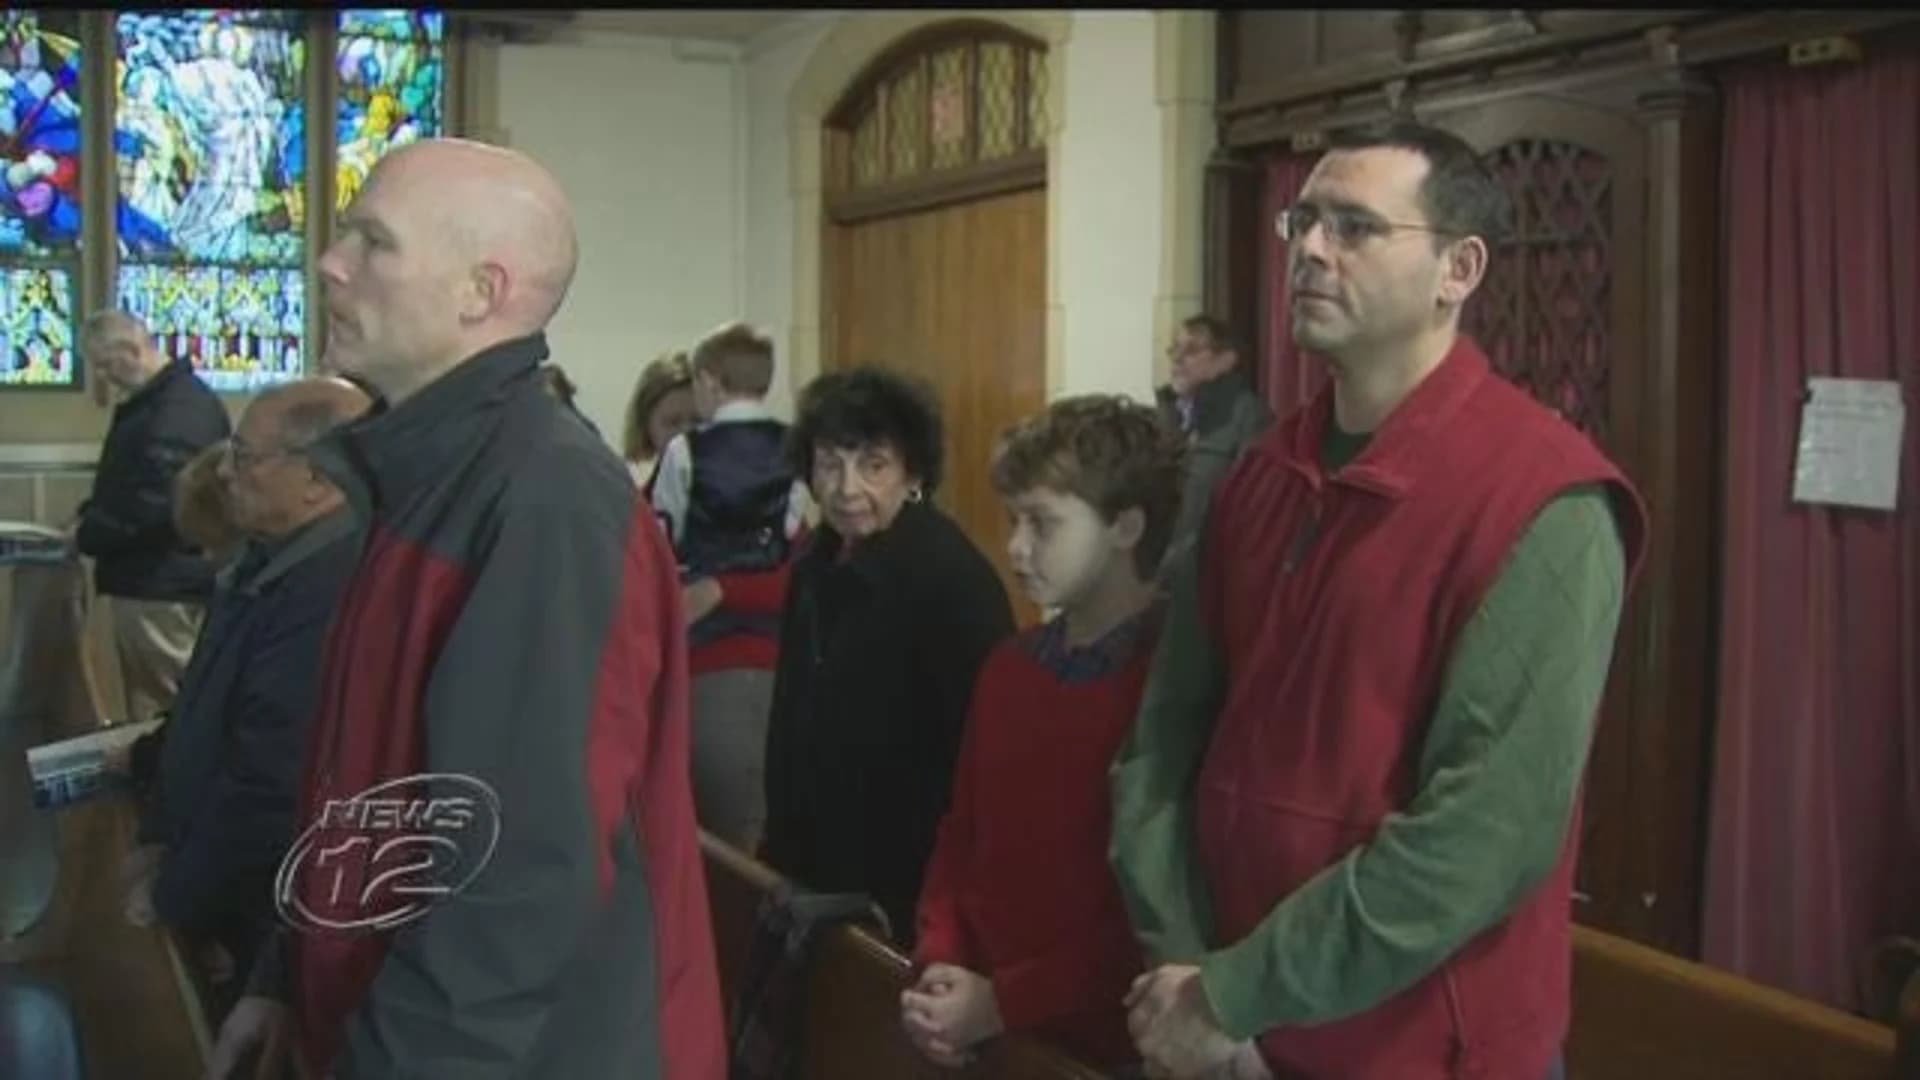 Hudson Valley residents celebrate Christmas Mass